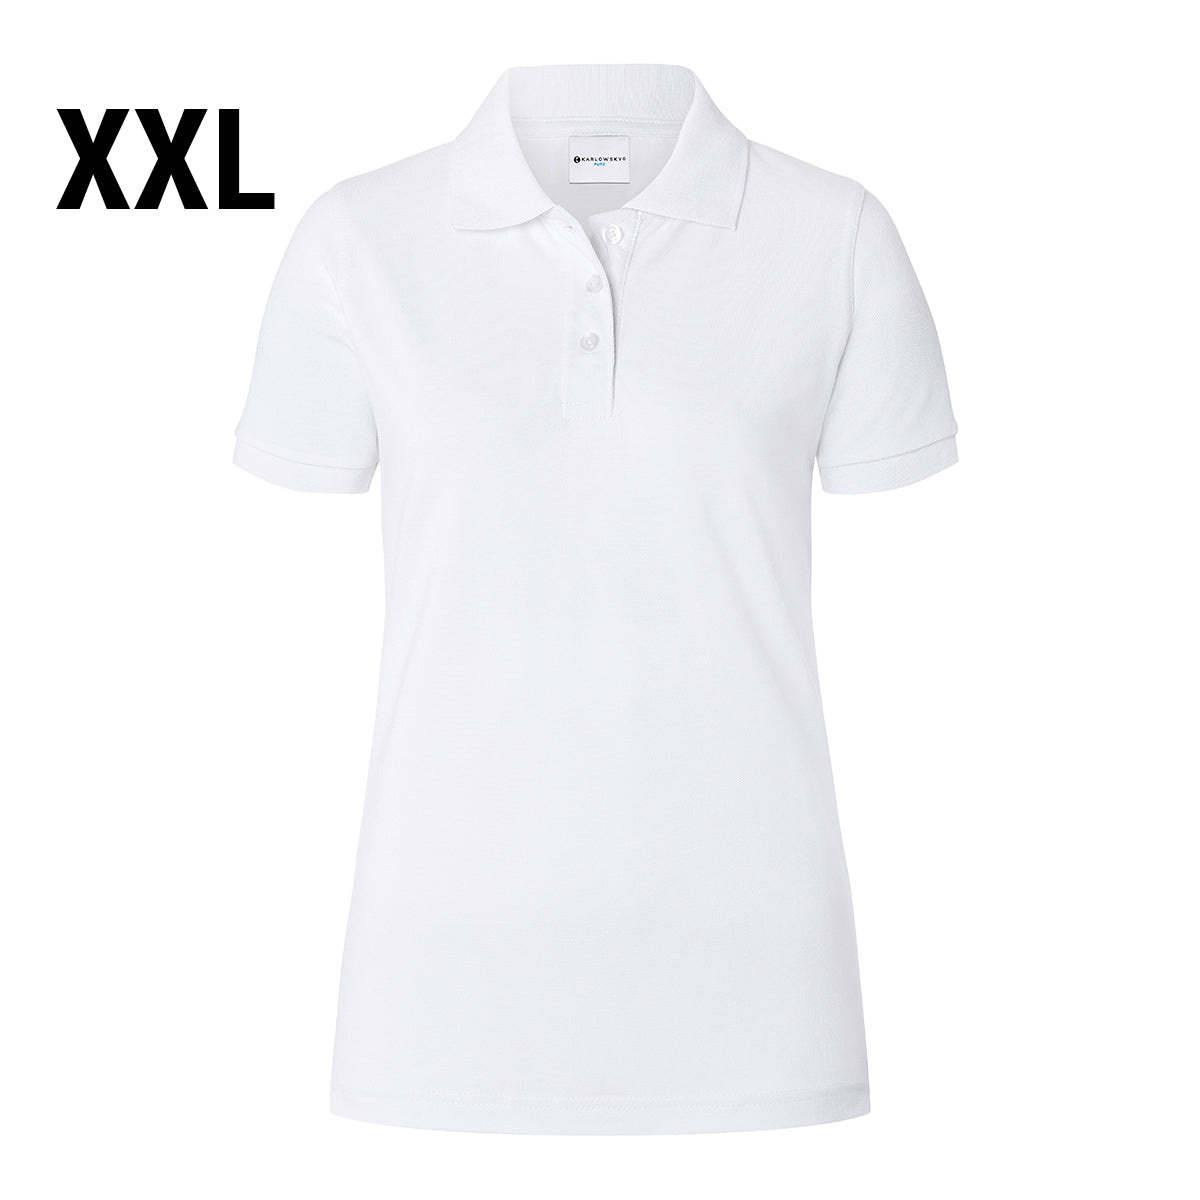 (6 stk) Karlowsky - Workwear Polo Shirt Basic til Damer - Hvid - Størrelse: 2XL